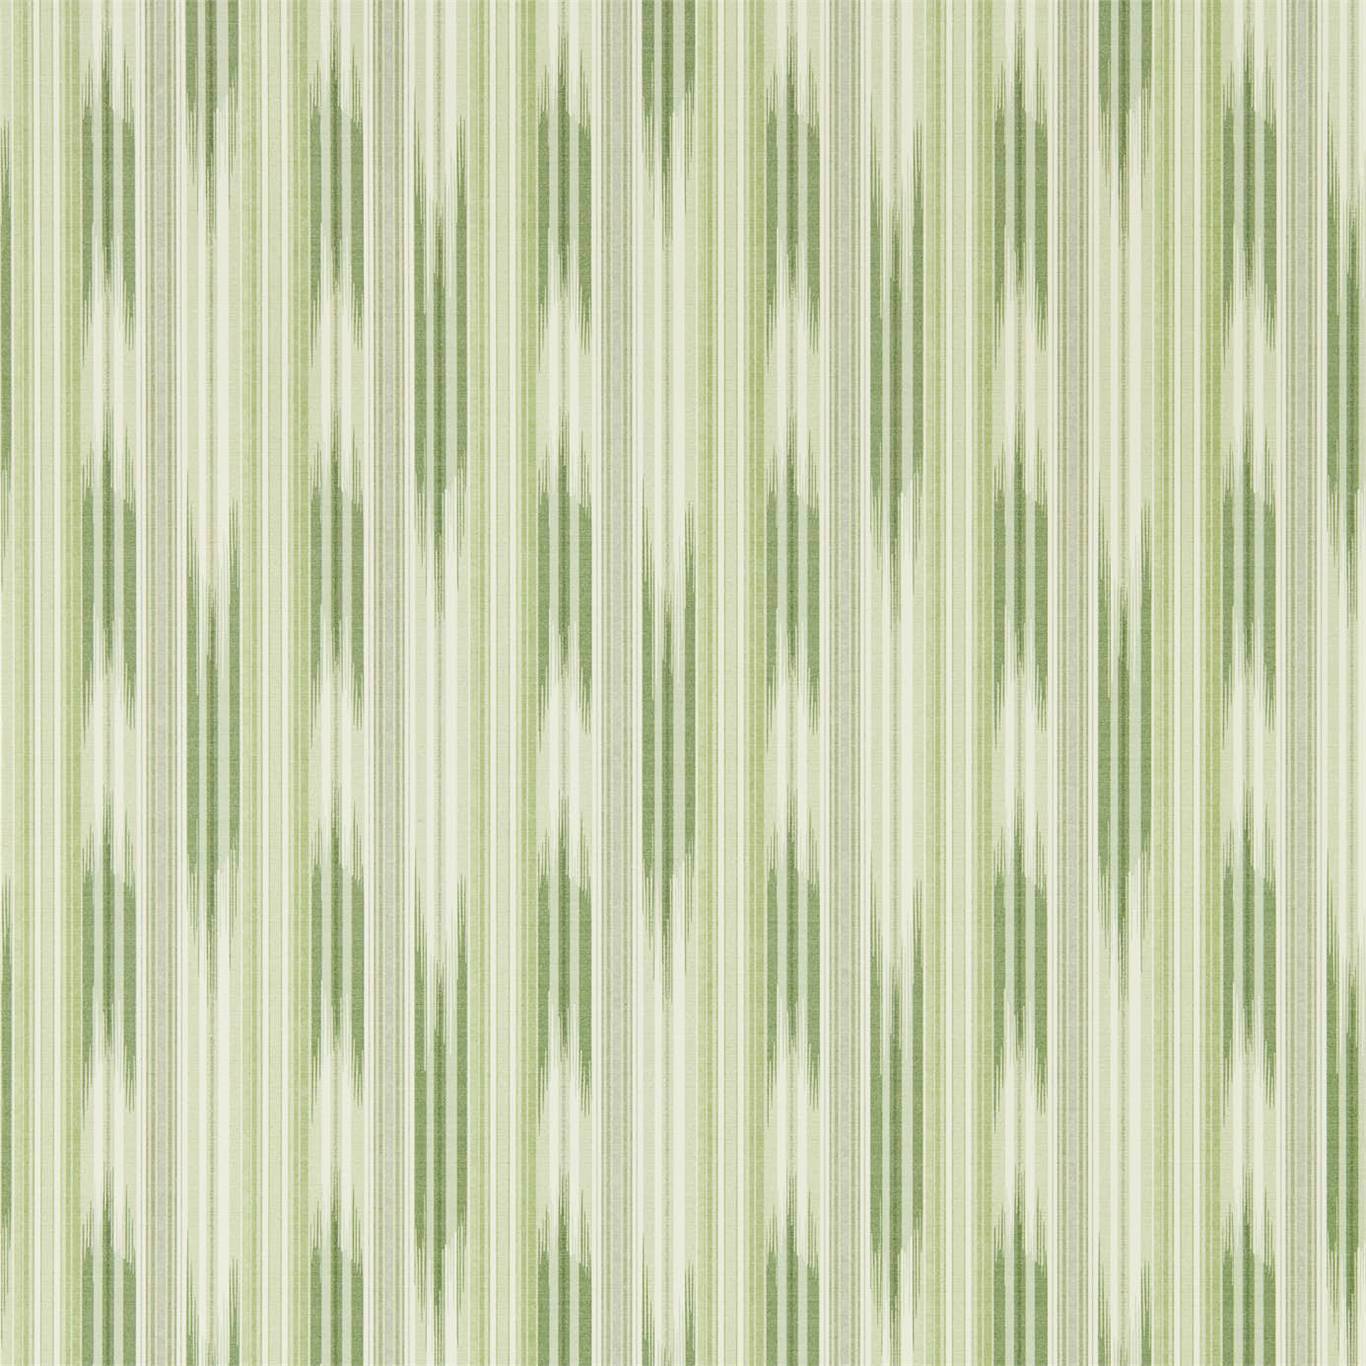 Ishi Emerald Wallpaper DCPW216779 by Sanderson